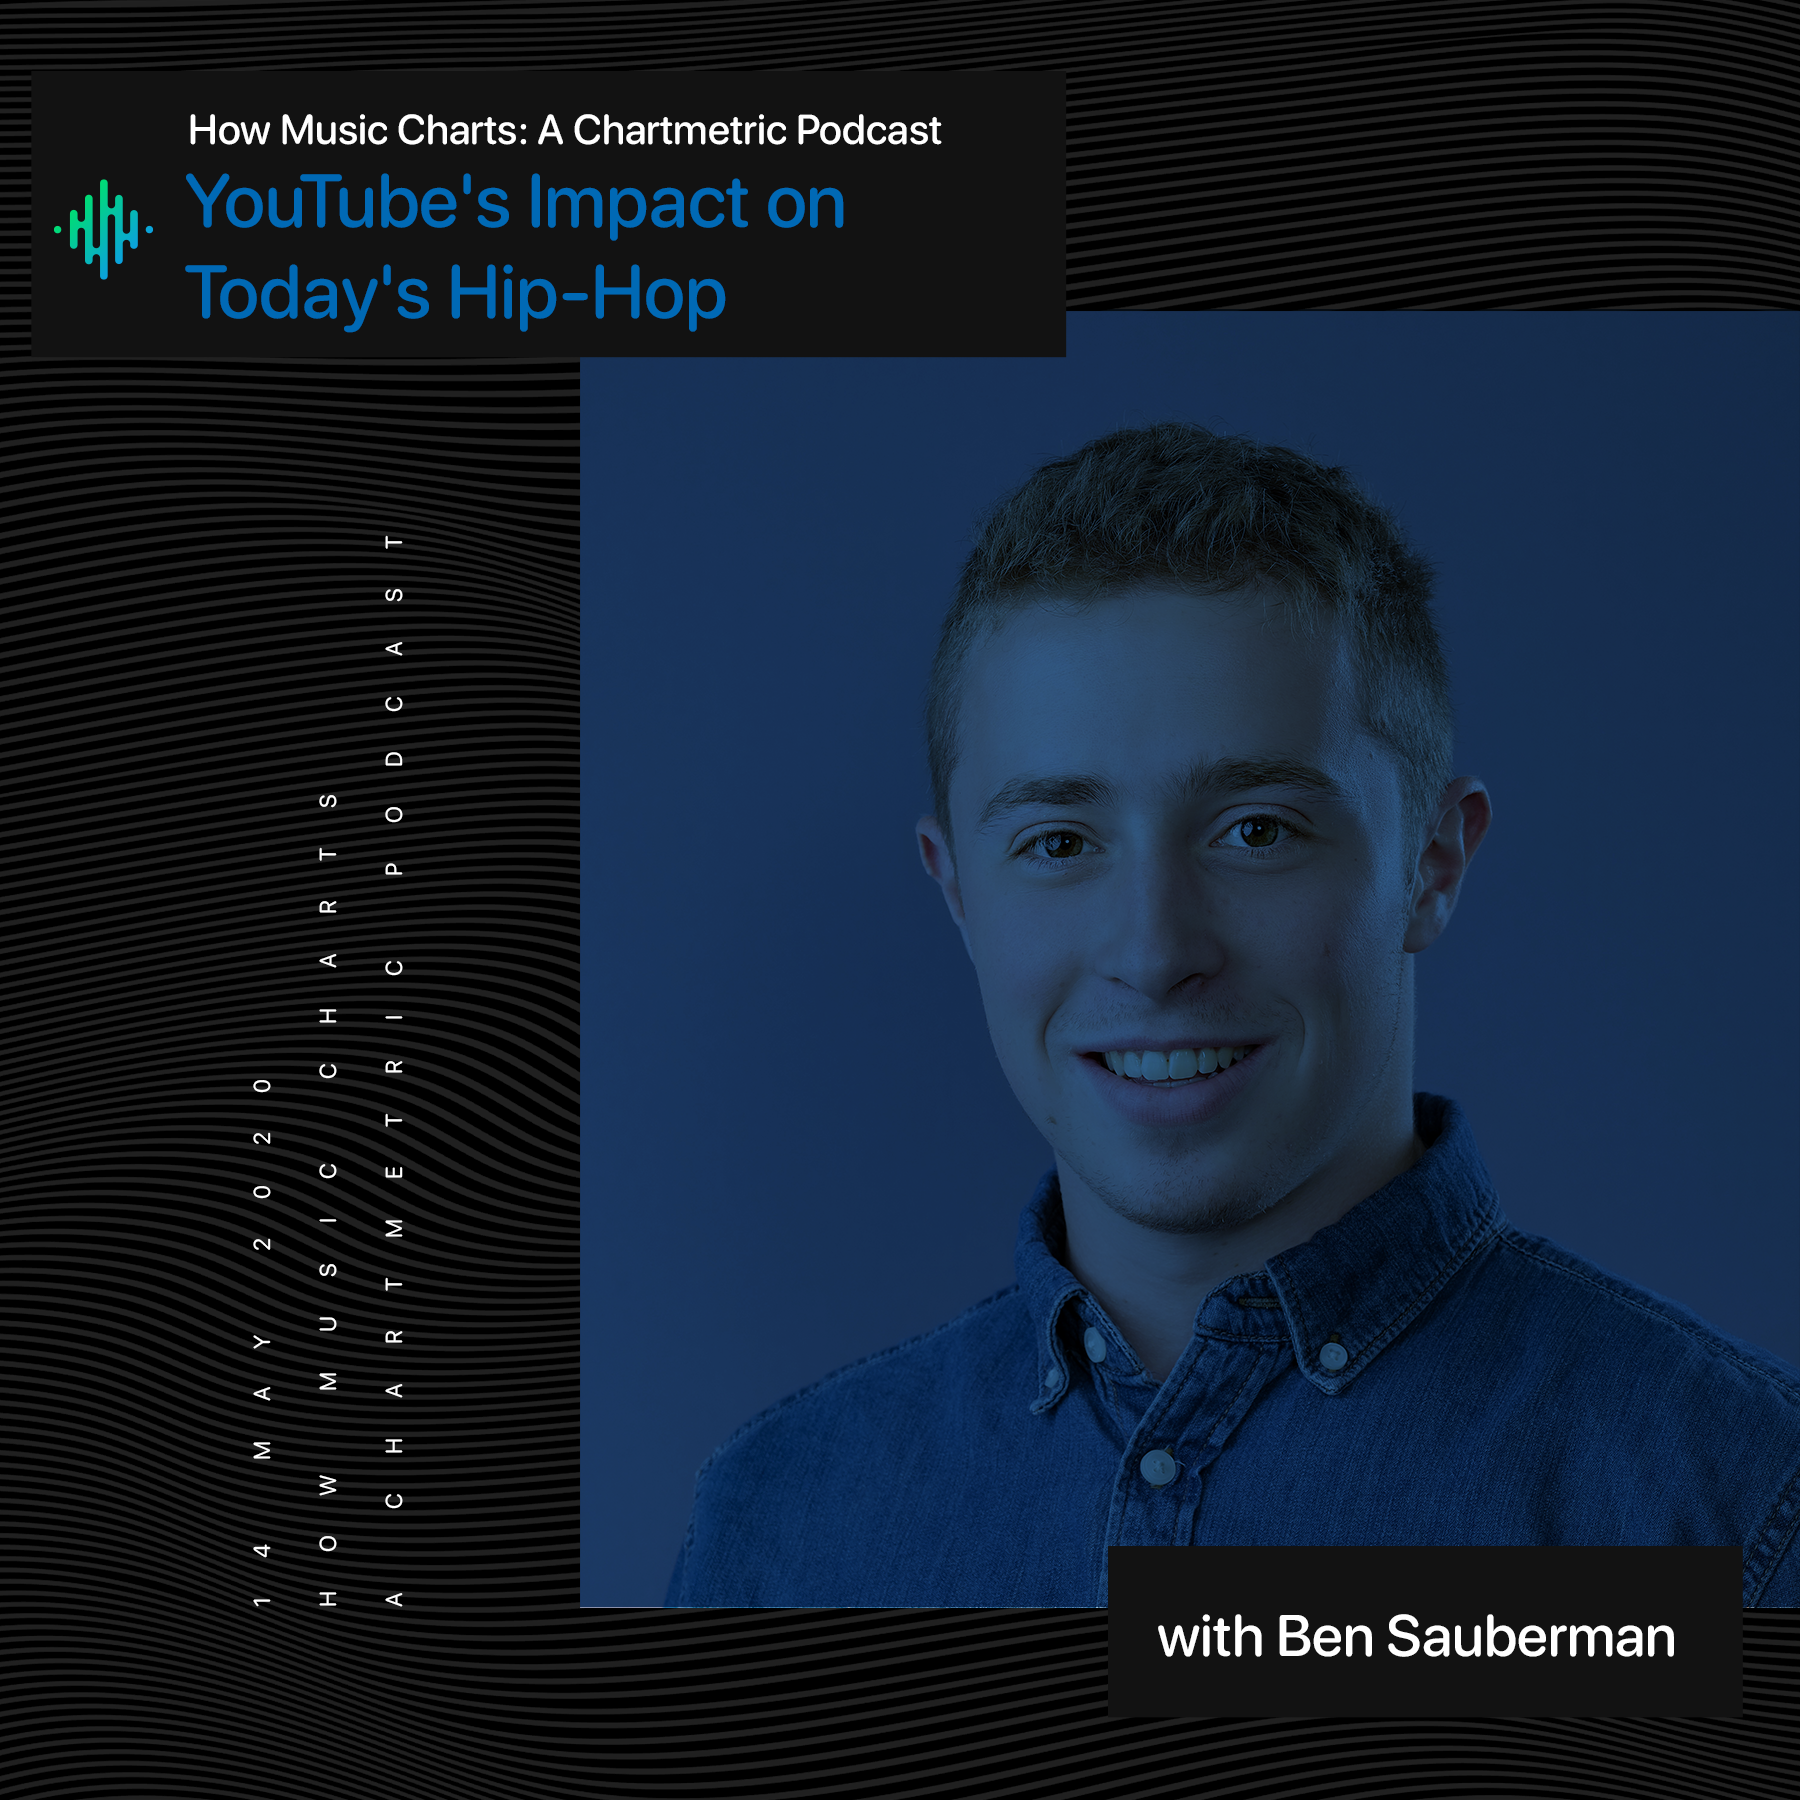 YouTube's Impact on Today's Hip-Hop With Ben Sauberman